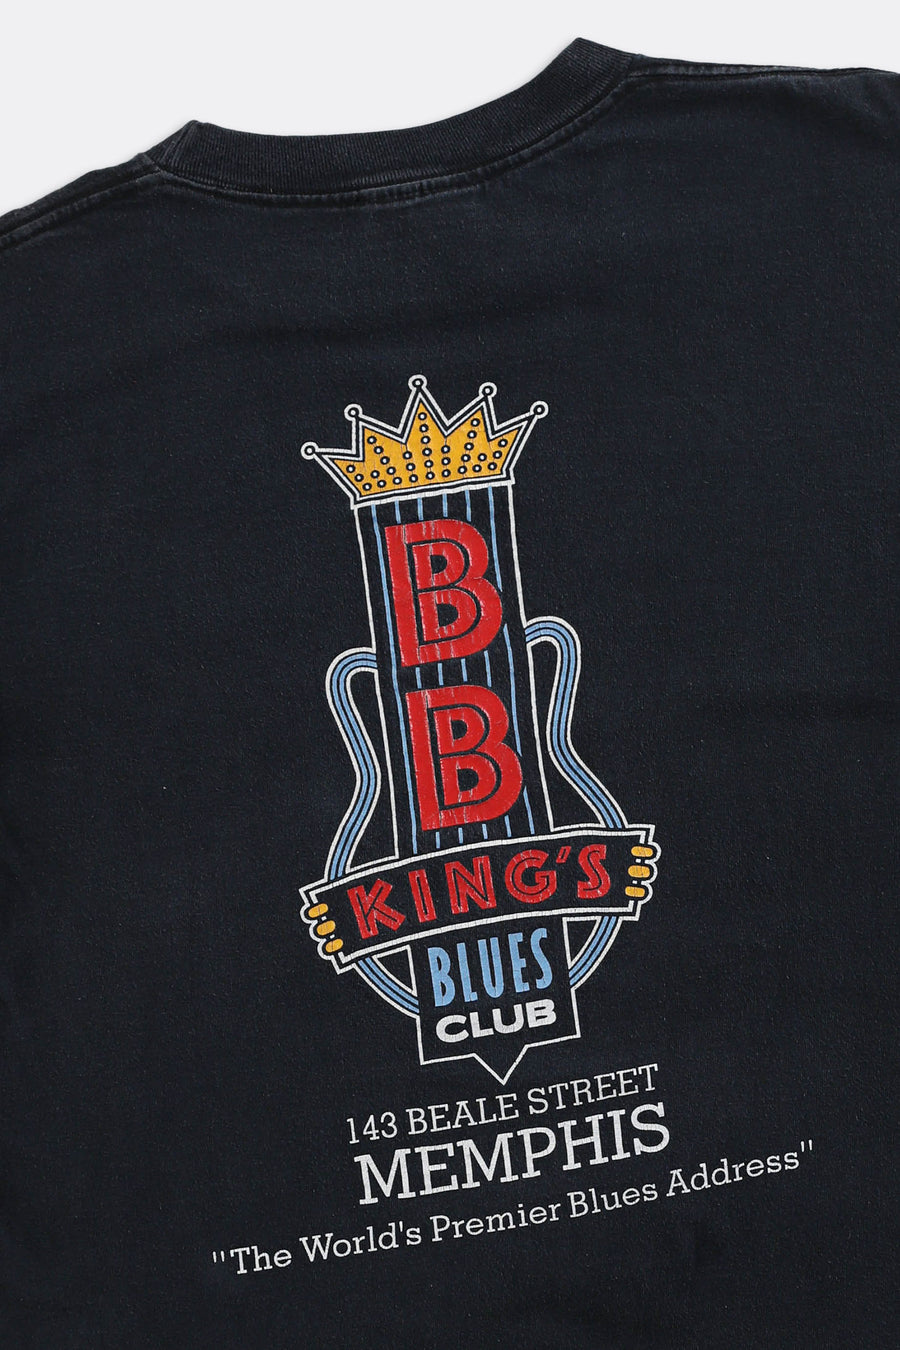 Vintage B.B. King's Blue Club Longsleeve Tee